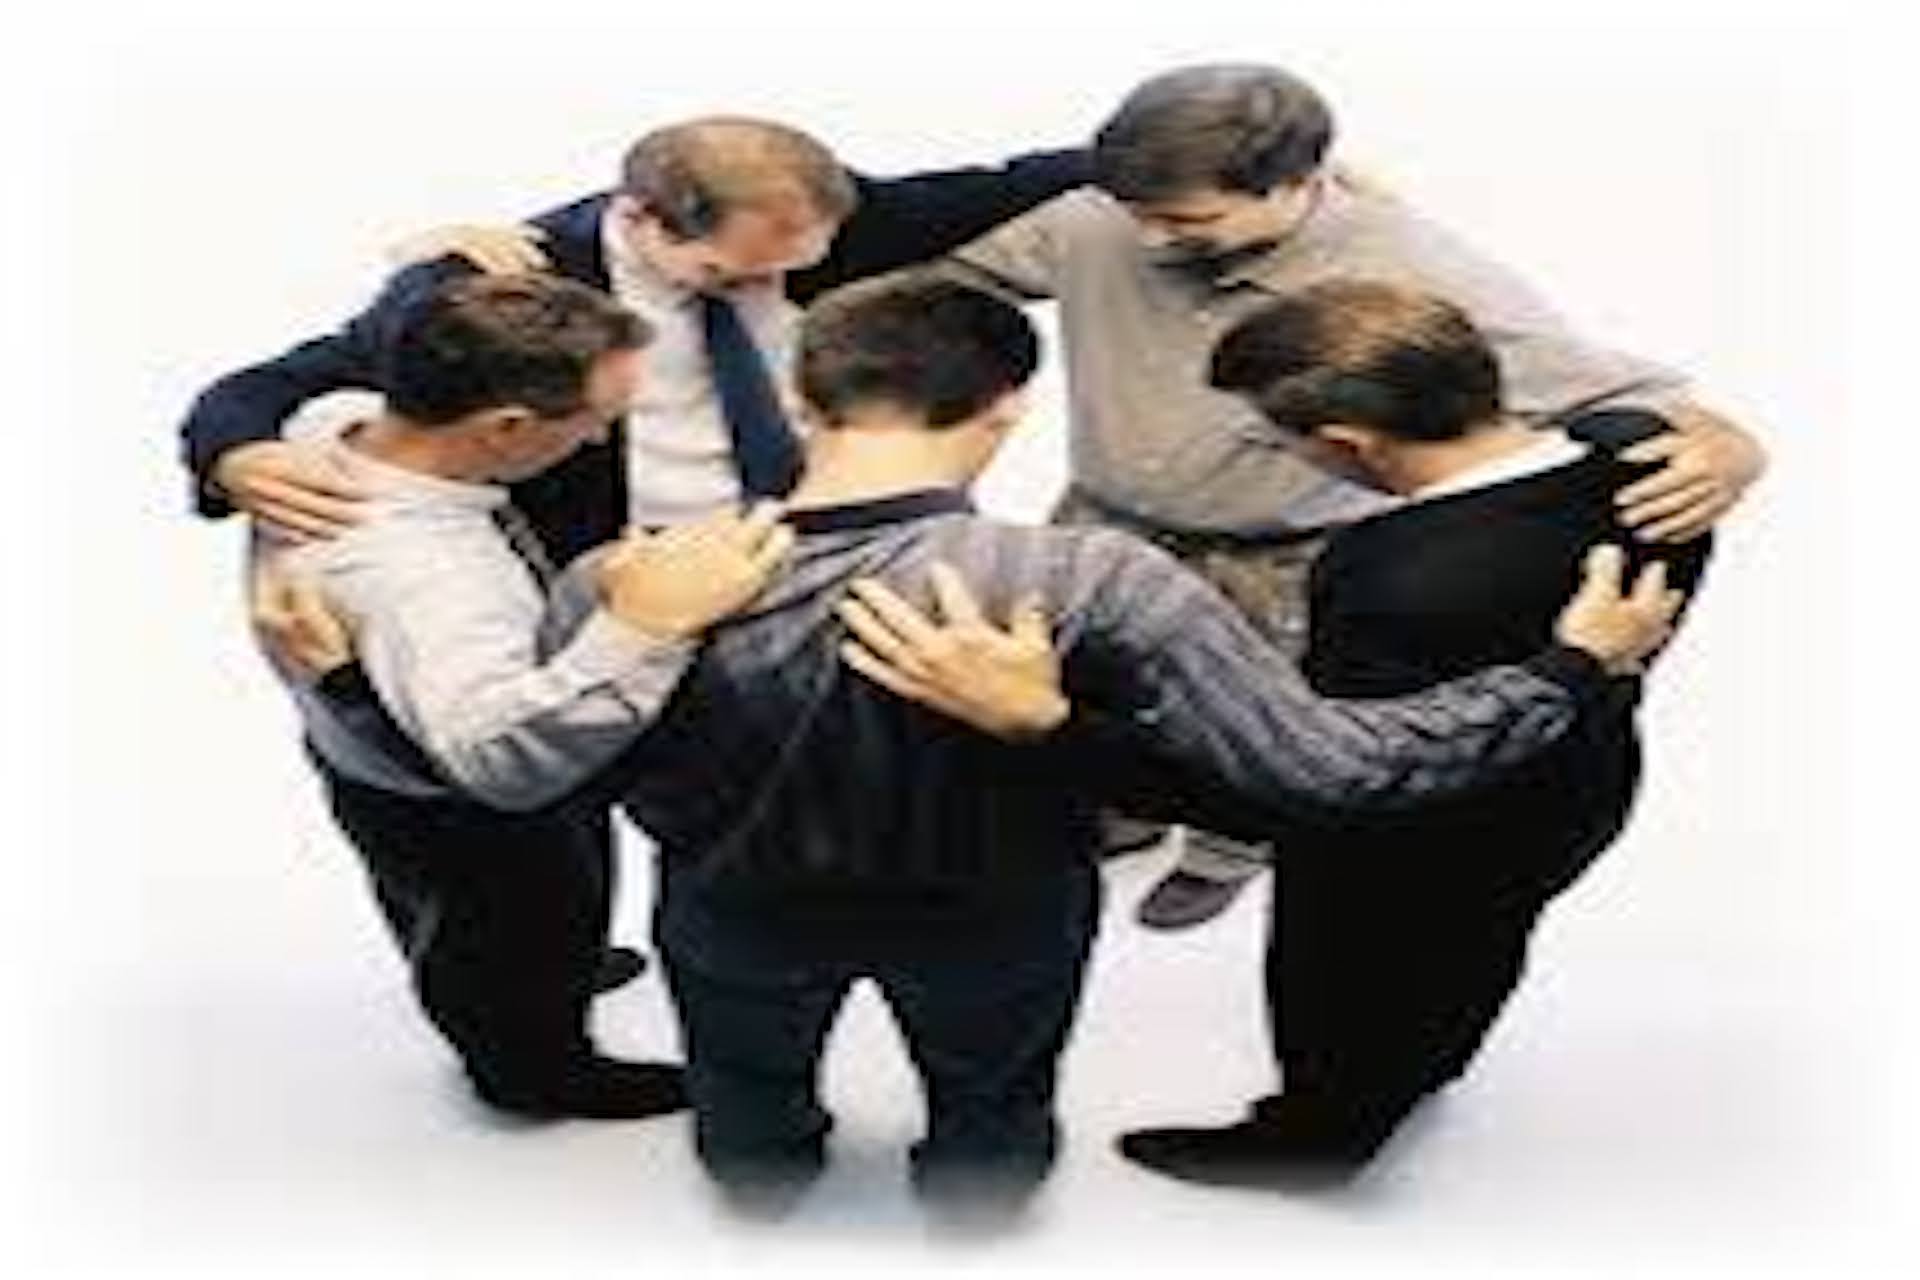 Prayer Group